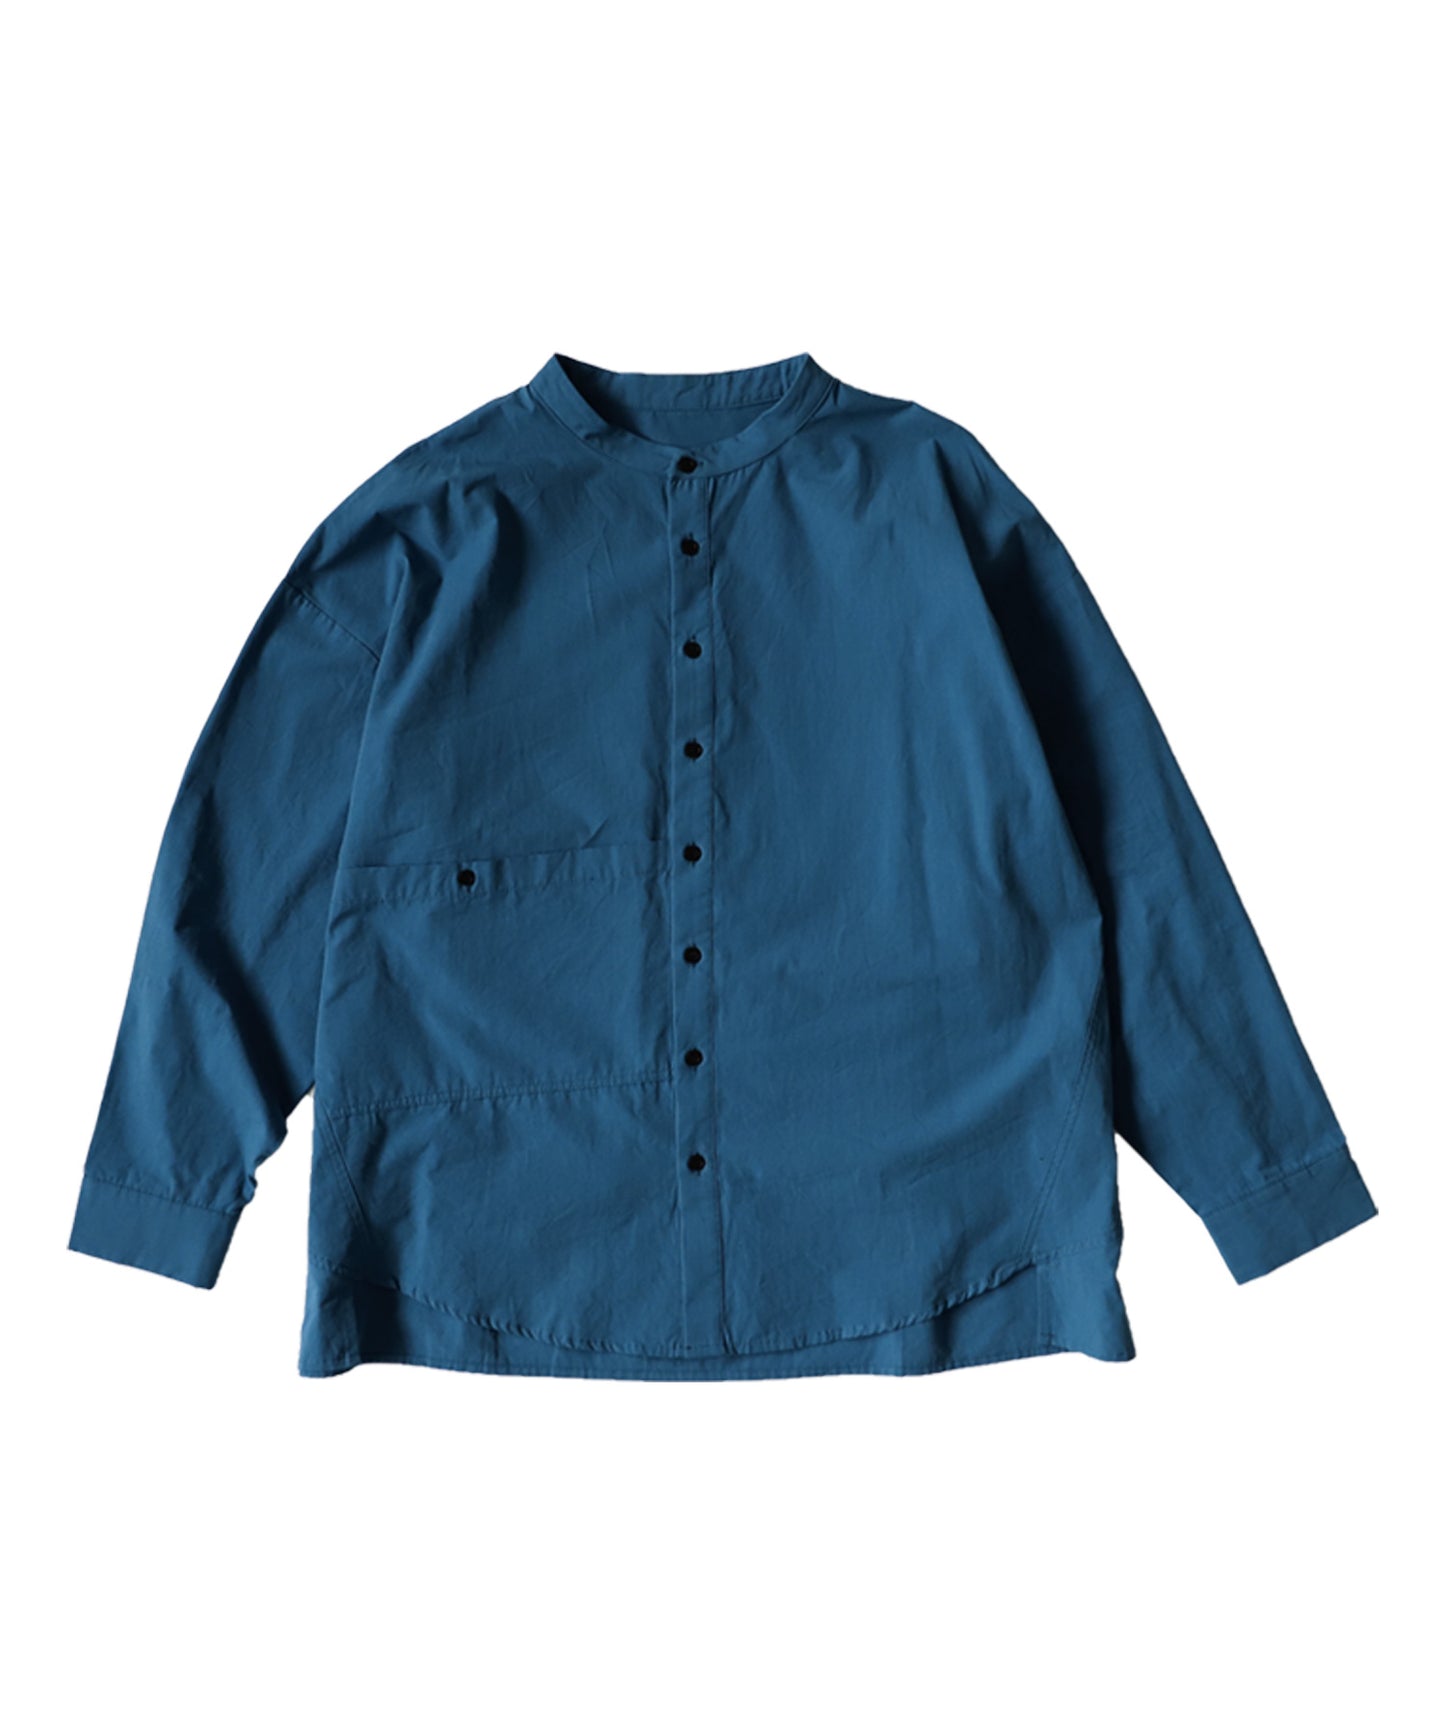 Design Pocket Men's Shirt Tops